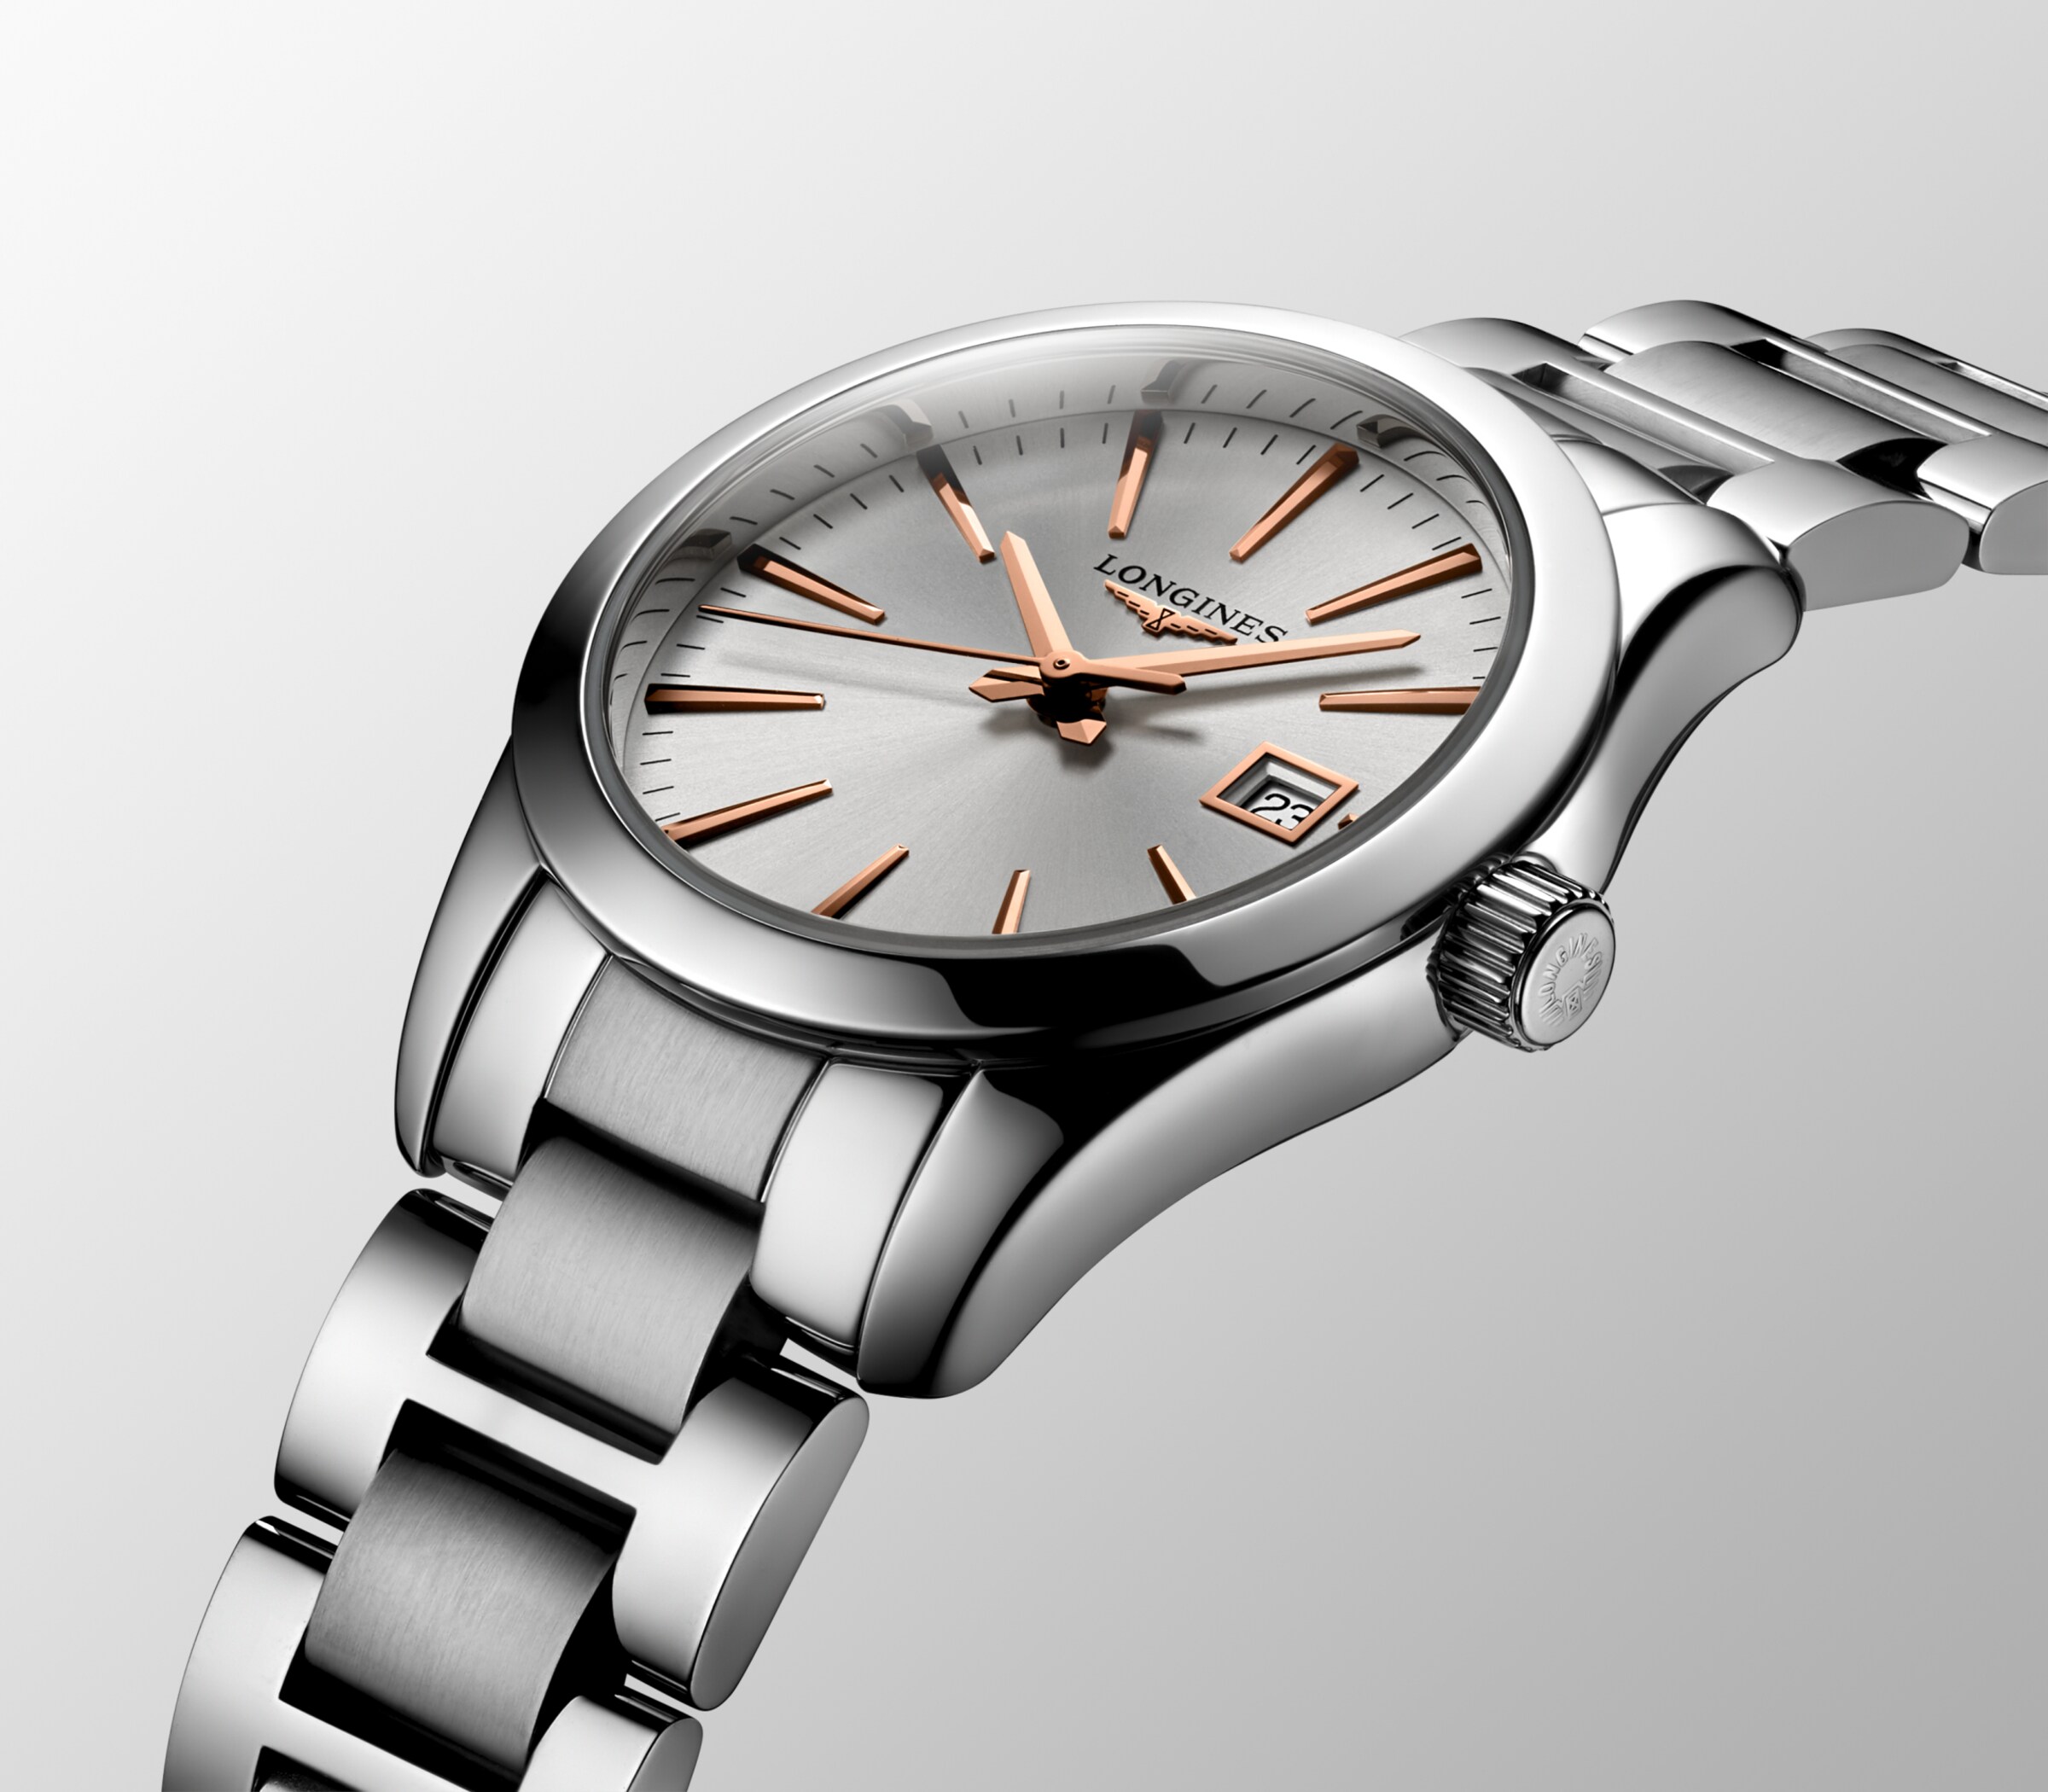 Longines CONQUEST CLASSIC Quartz Stainless steel Watch - L2.286.4.72.6